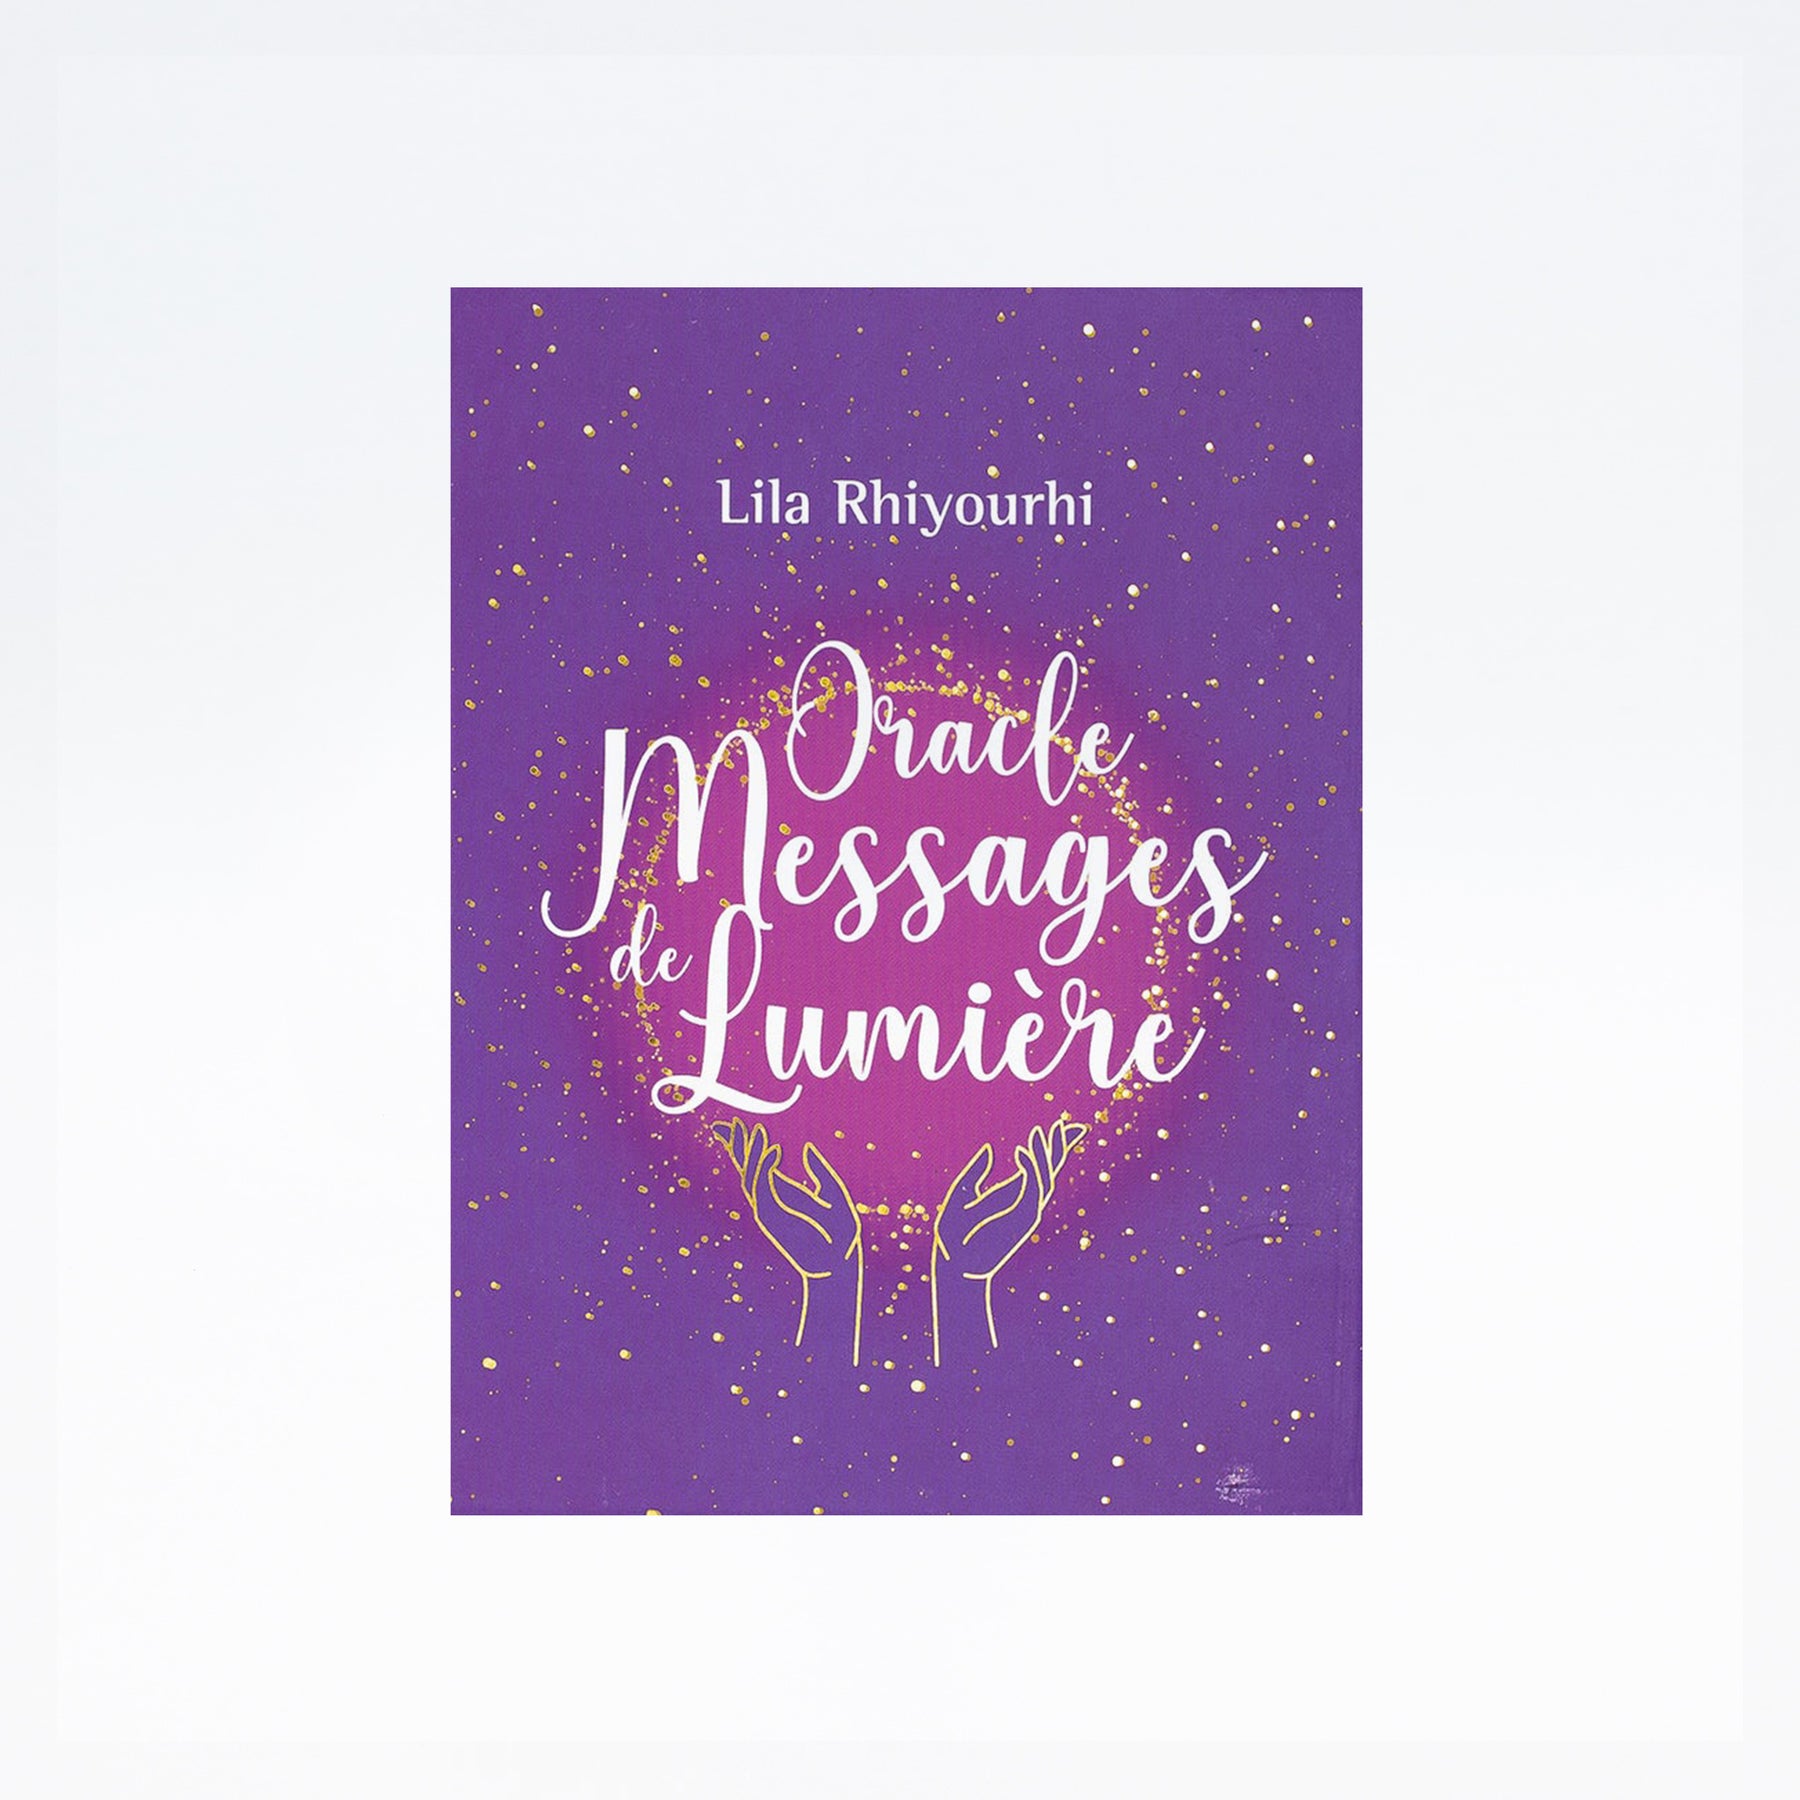 Oracle messages de lumière - Lila Rhiyourhi - Librairie Mollat